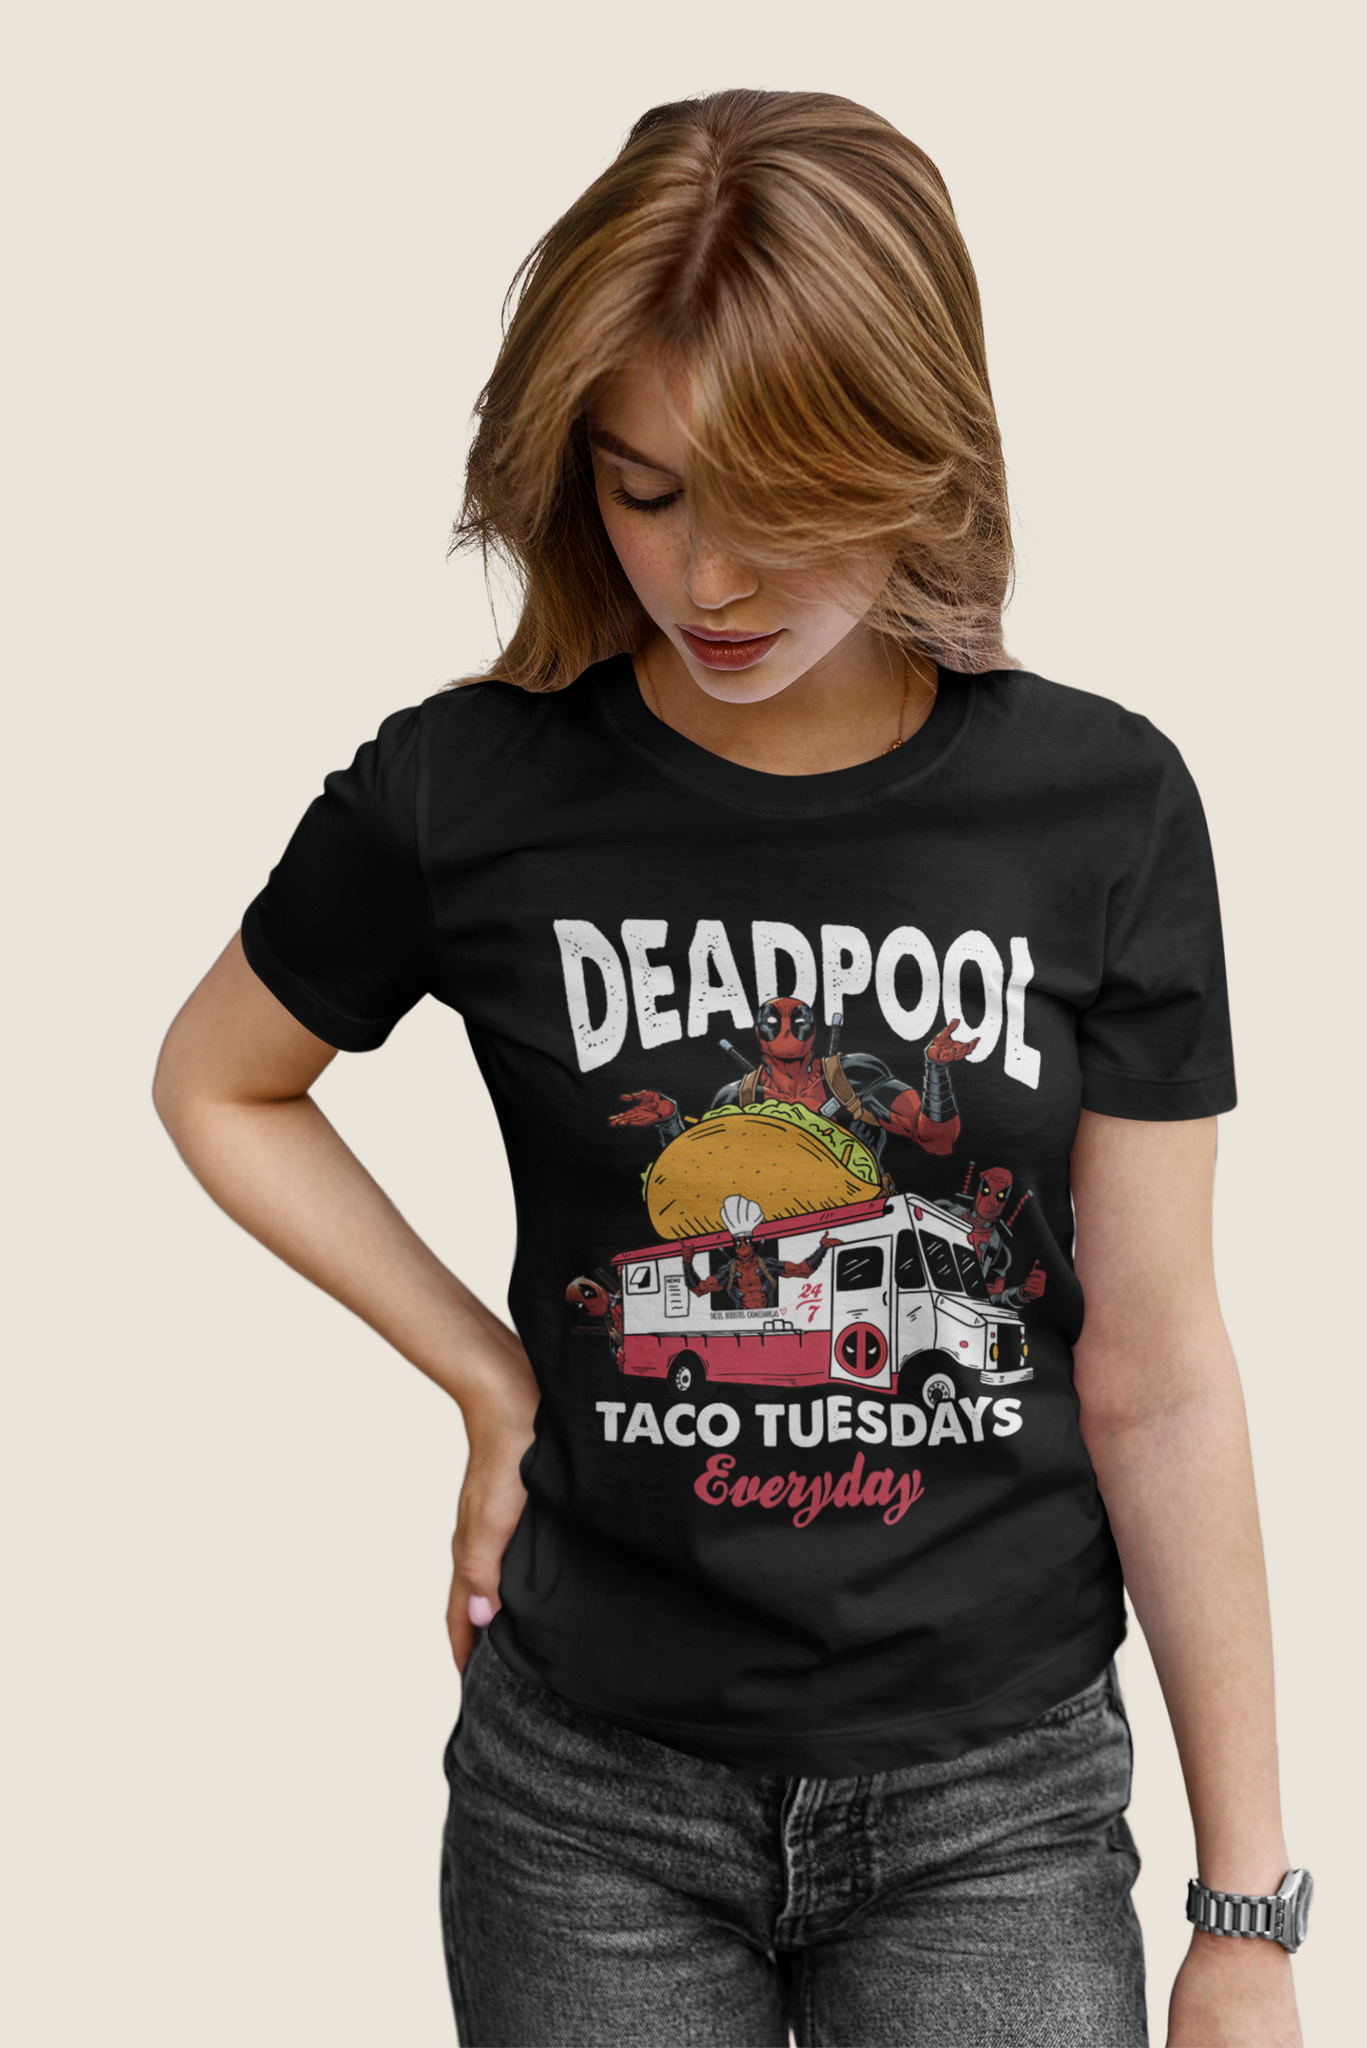 Deadpool T Shirt, Taco Tuesdays Everyday Tshirt, Superhero Deadpool T Shirt